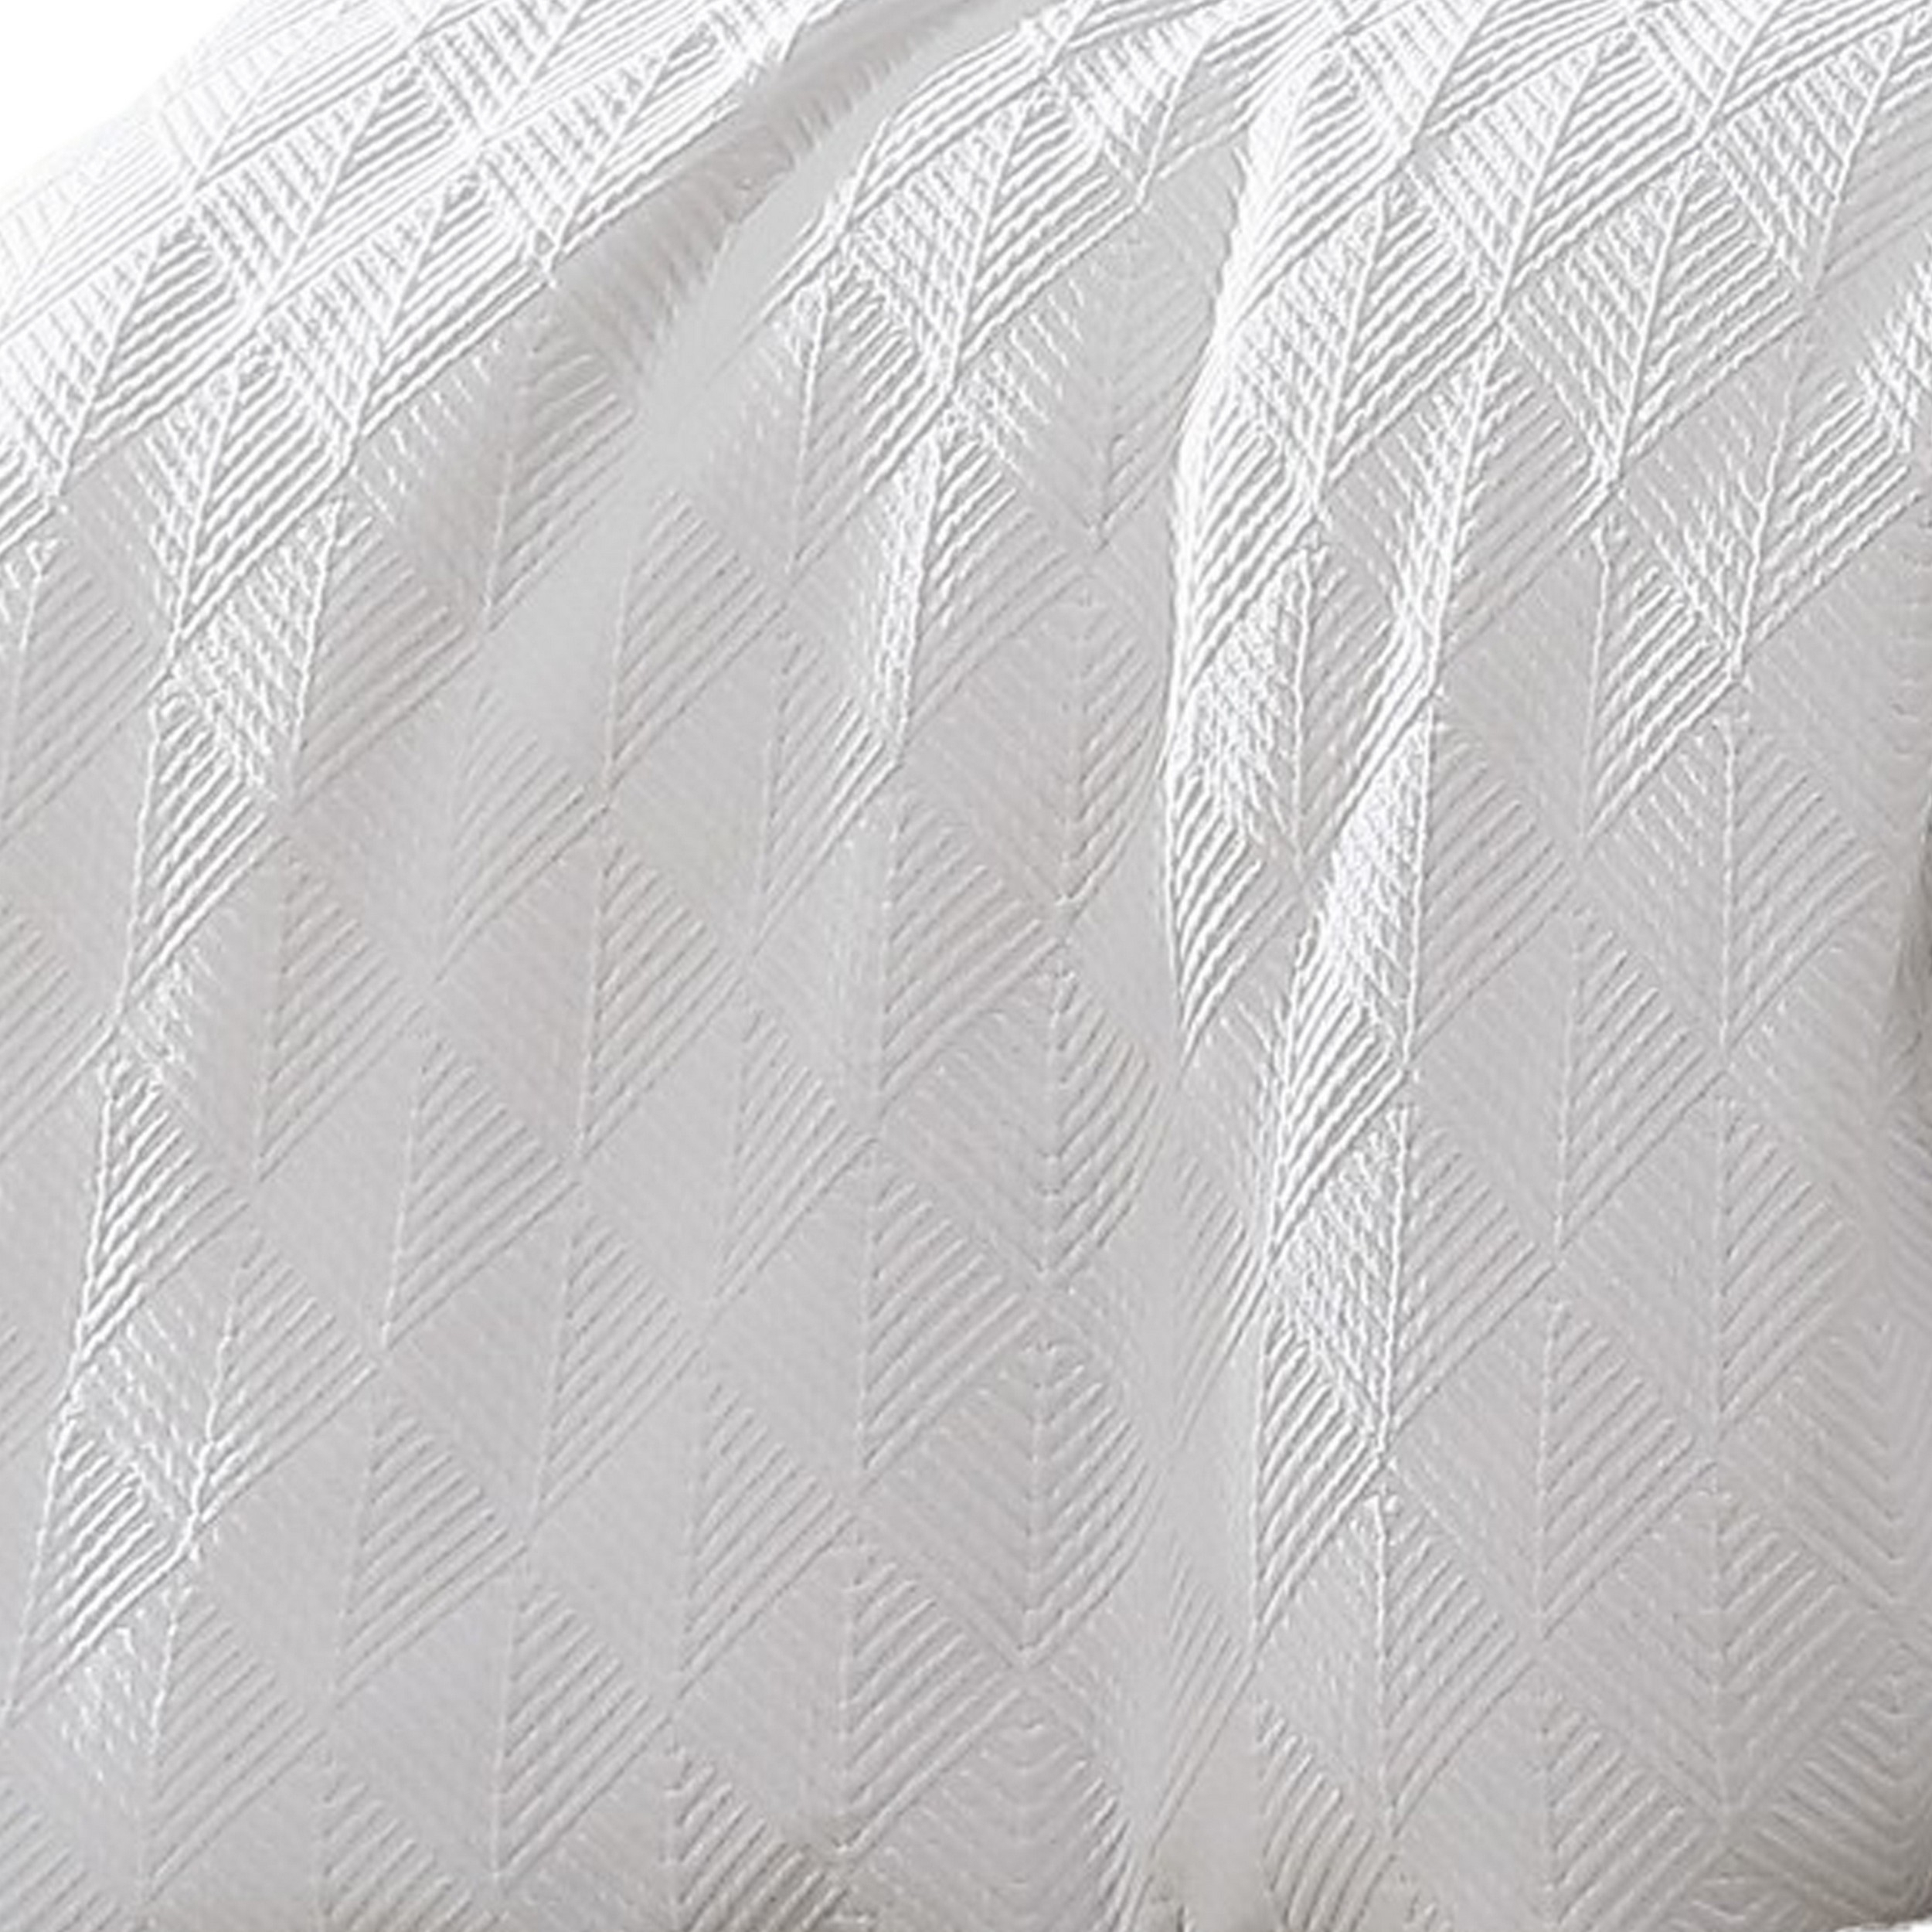 Max 4 Piece Queen Size Duvet Comforter Set, Diamond Woven White Cotton - Saltoro Sherpi